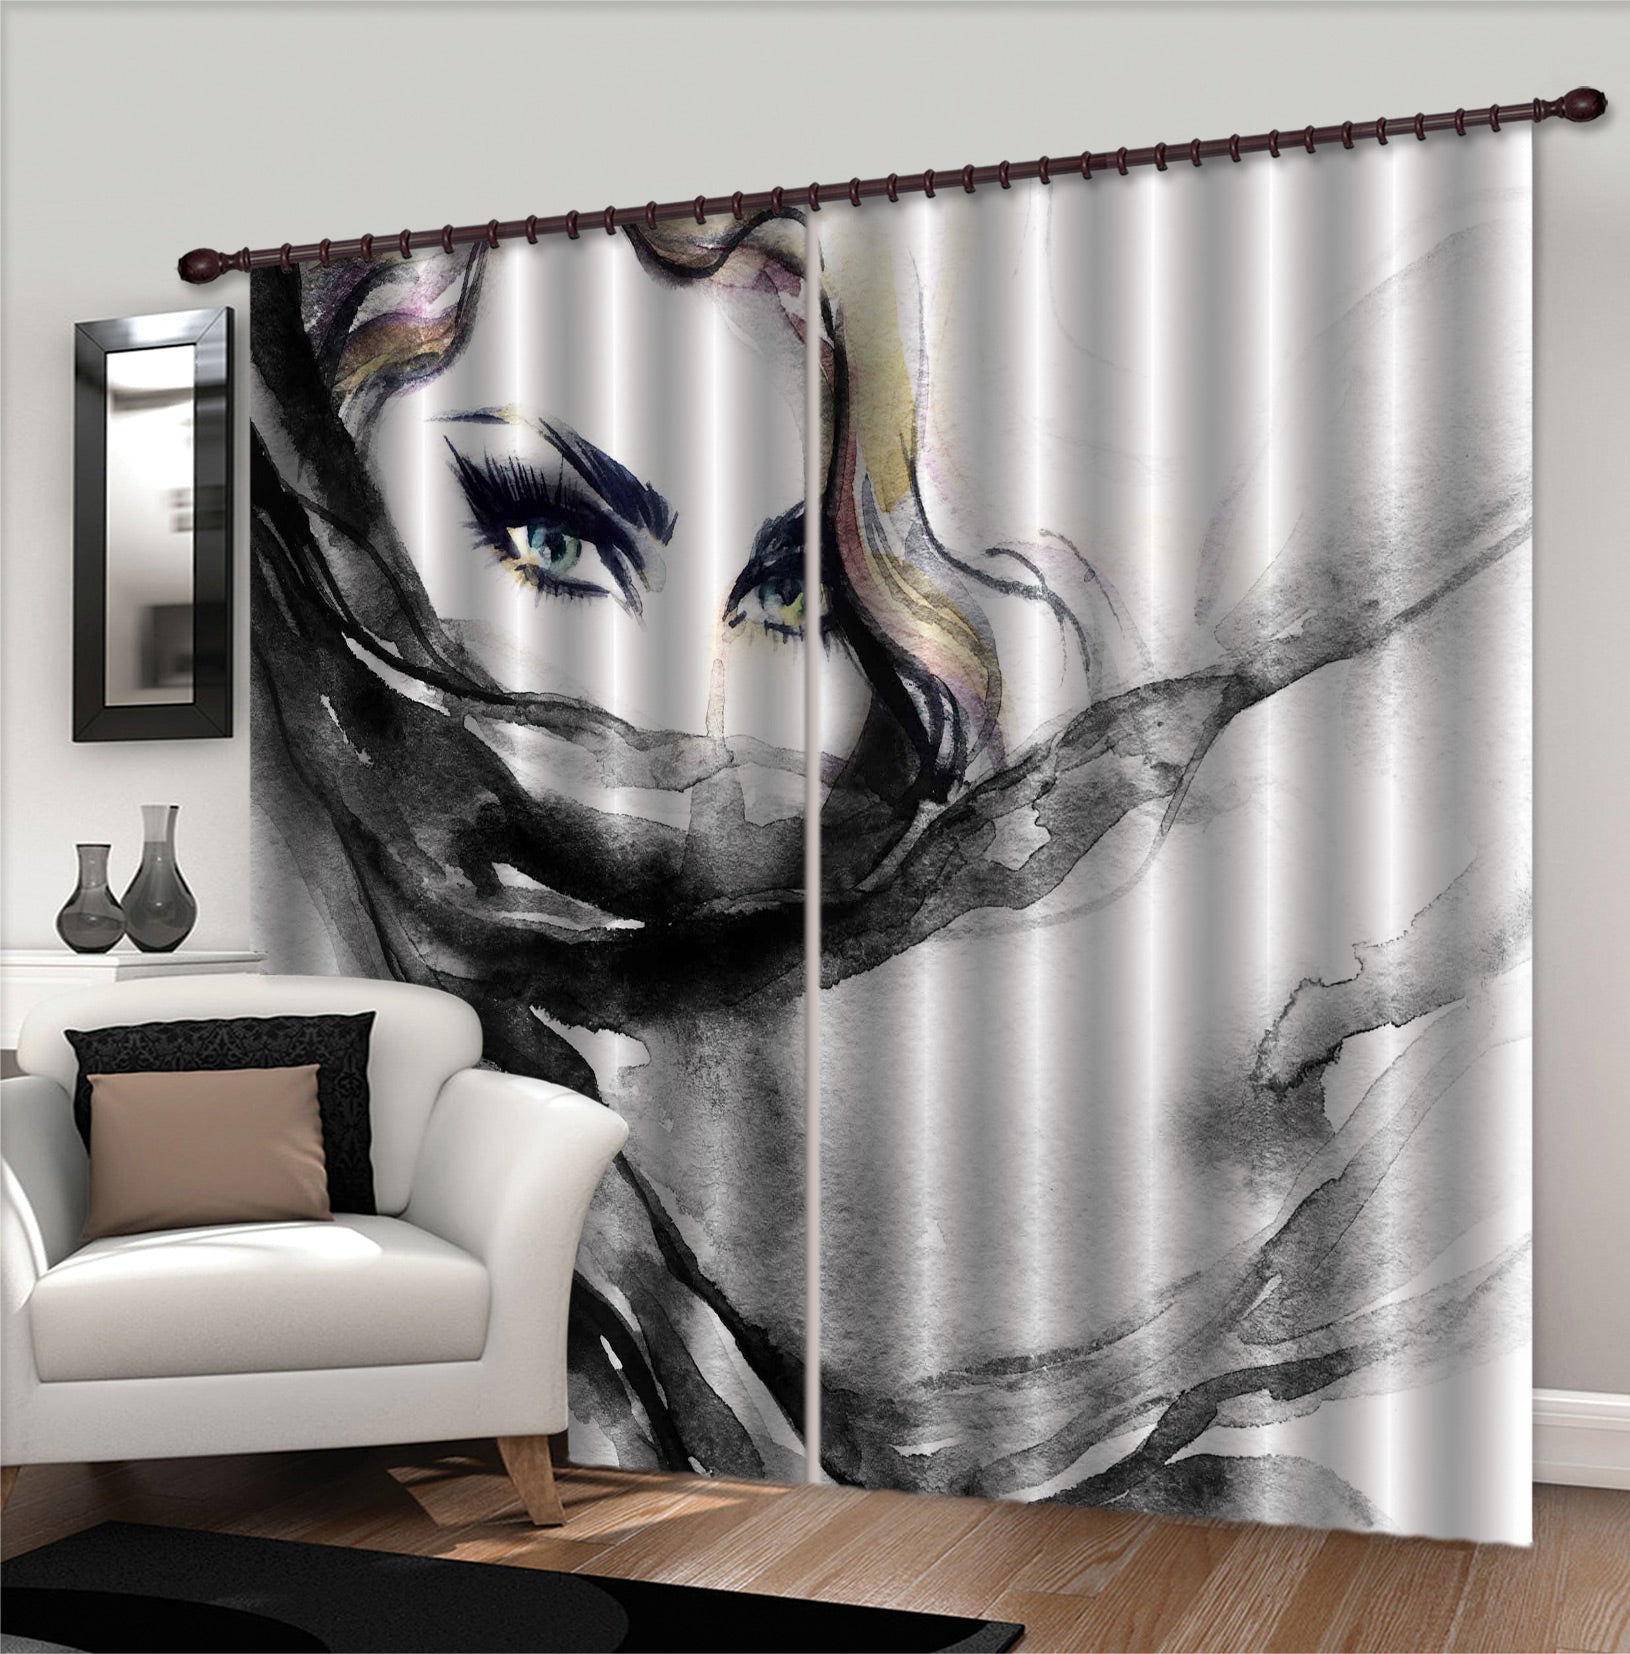 3D Black Yarn Woman 046 Curtains Drapes